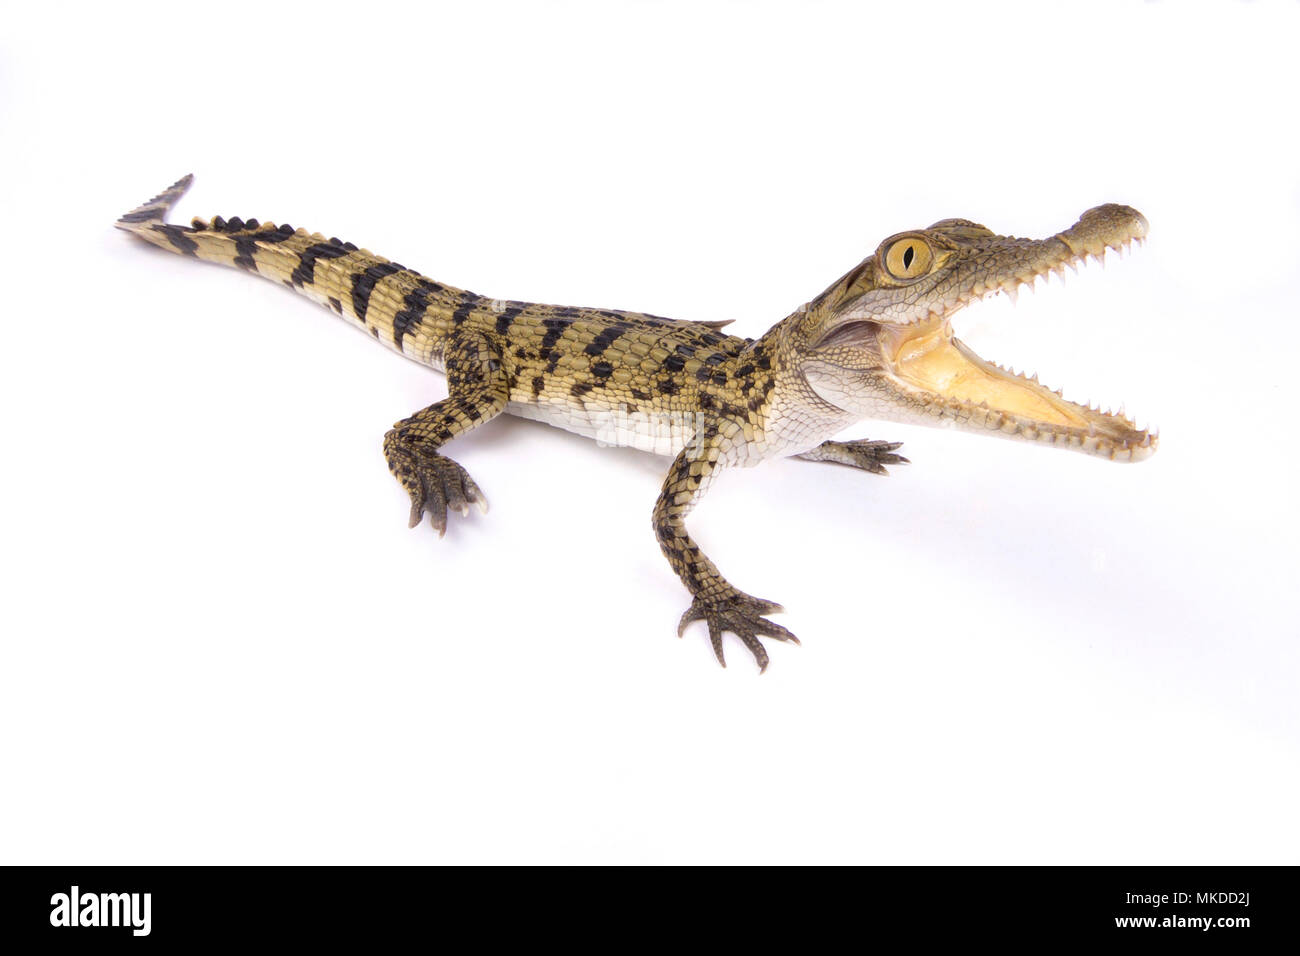 Philippine crocodile (Crocodylus mindorensis) on white background Stock Photo